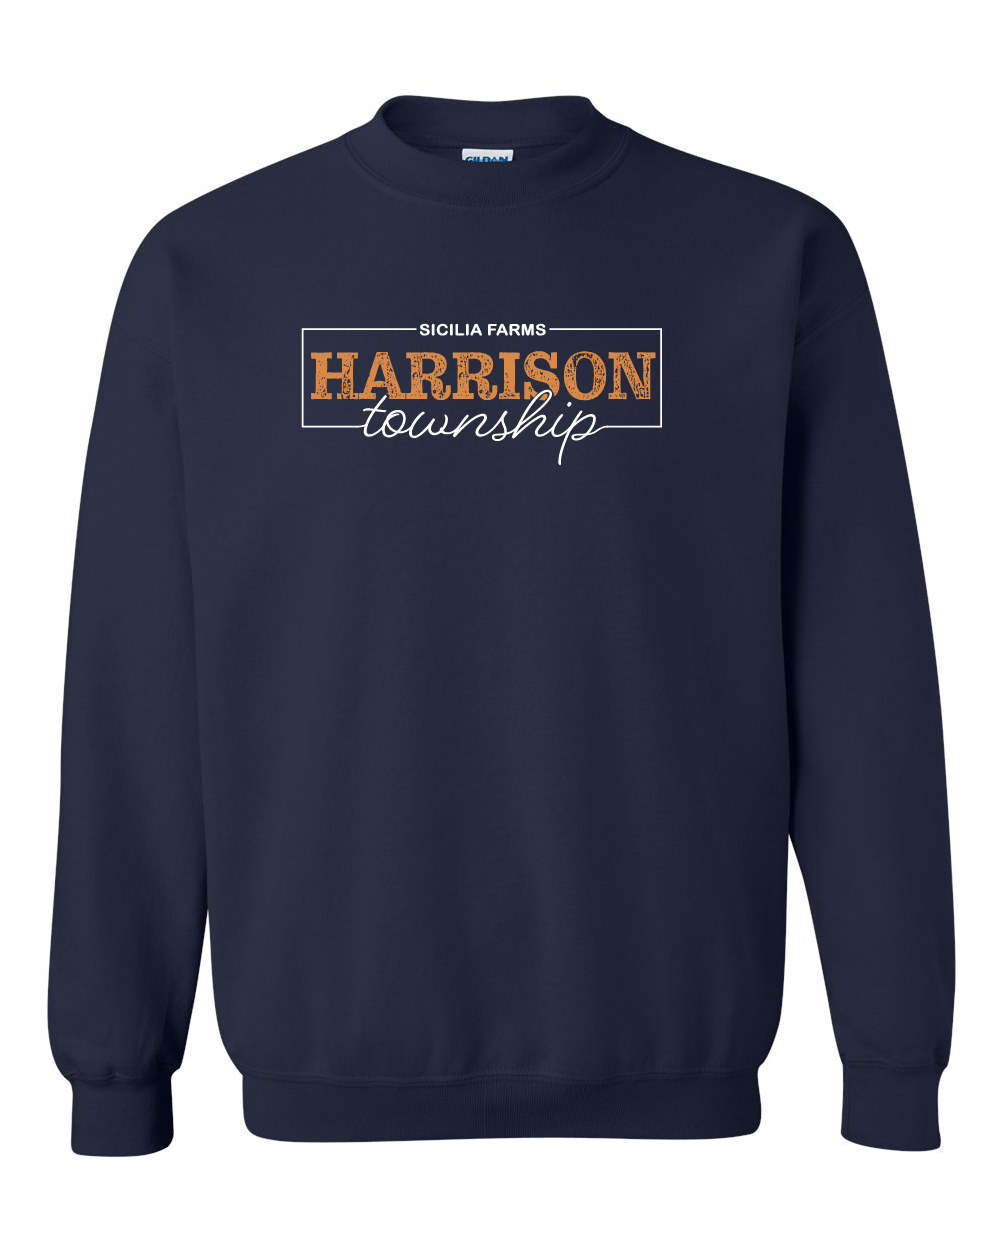 Harrison Township - Heavy Blend Crewneck Sweatshirt